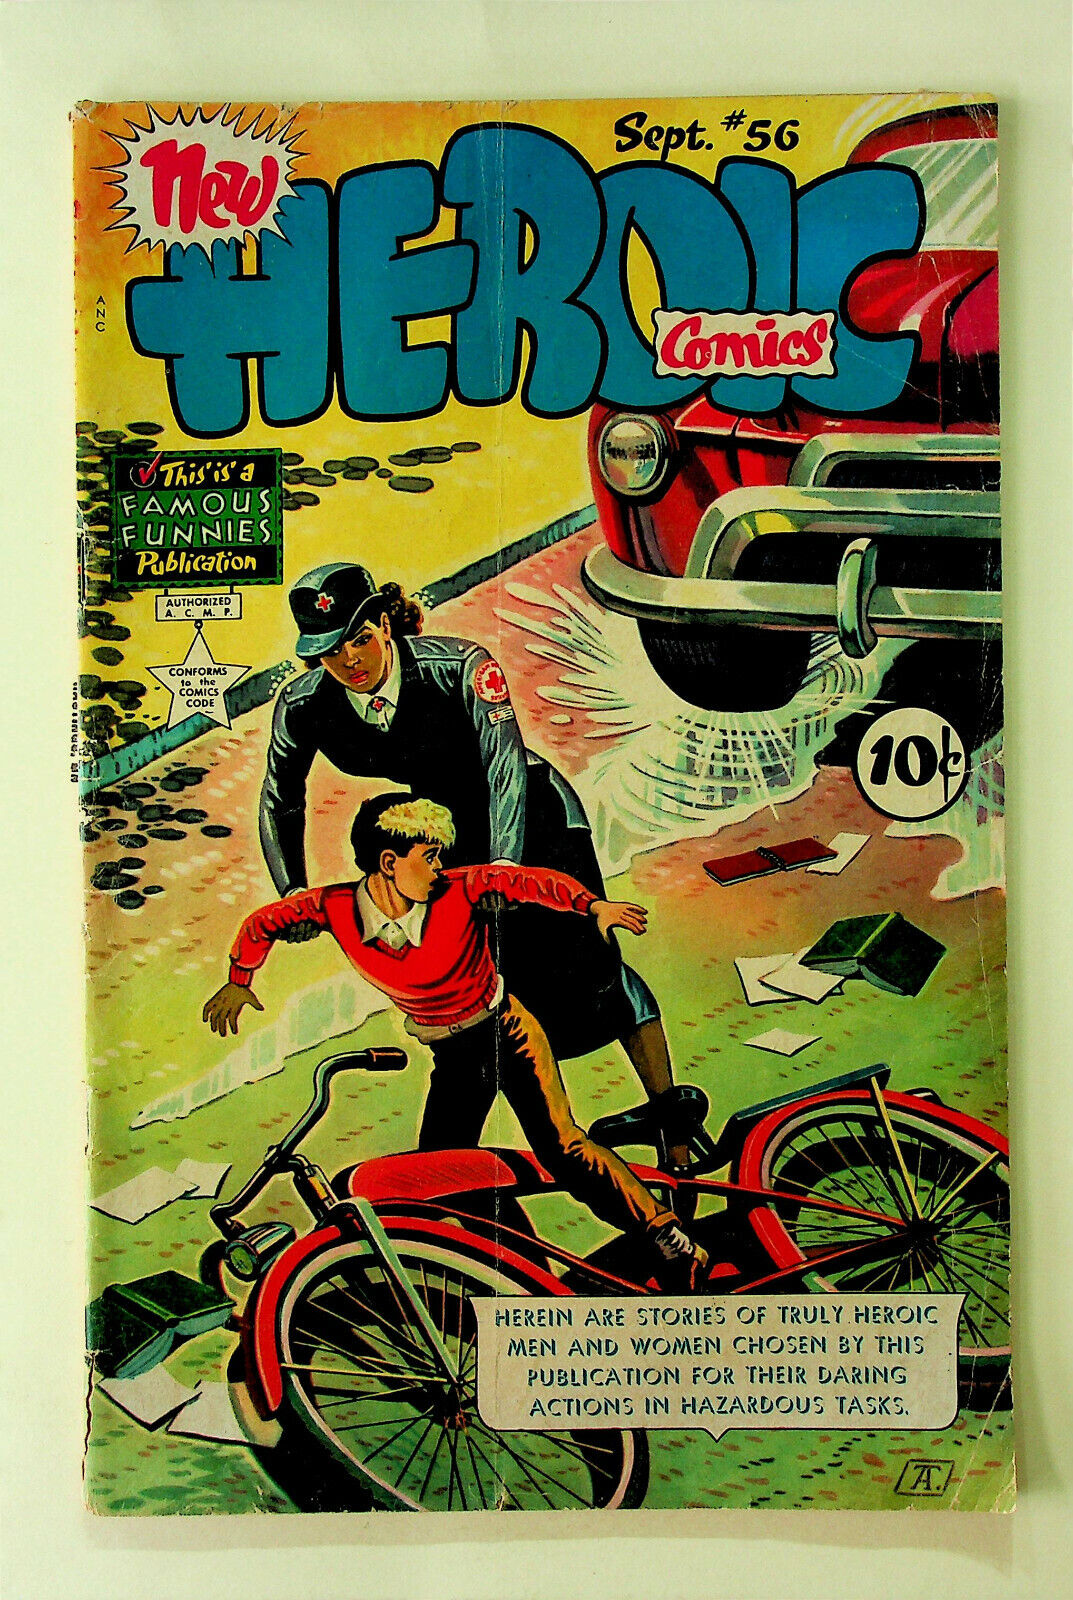 New Heroic Comics #56 (Sep 1949; Dell) - Good